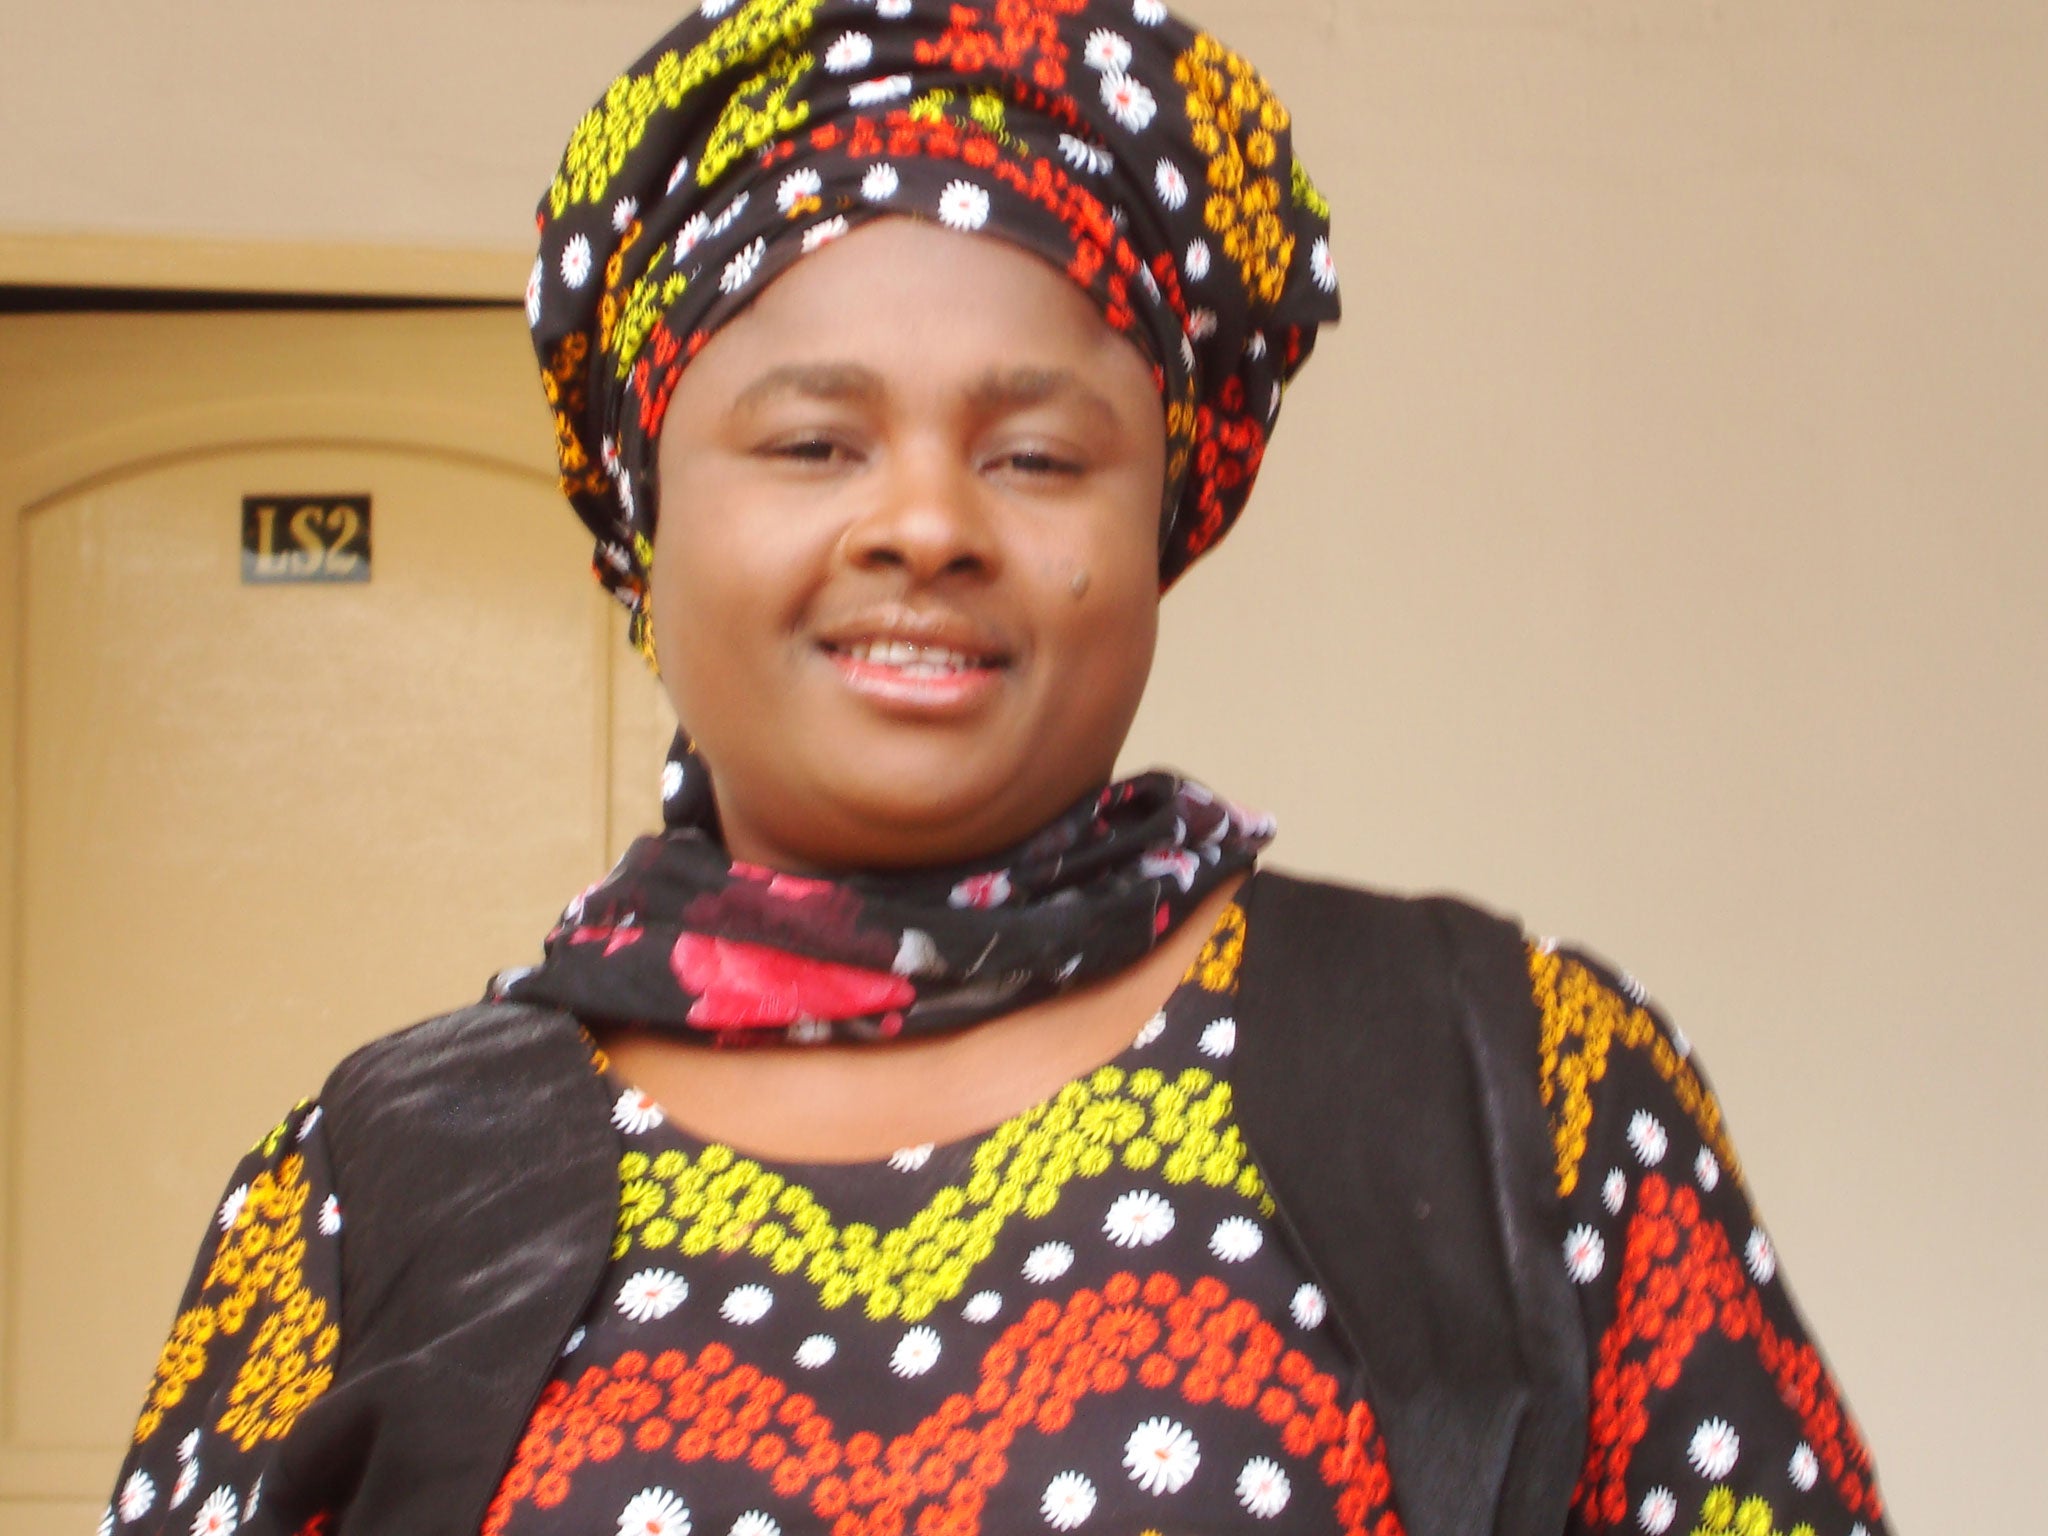 The Nigerian preacher Helen Ukpabio is believed to have addressed three gatherings in London on her visit last week